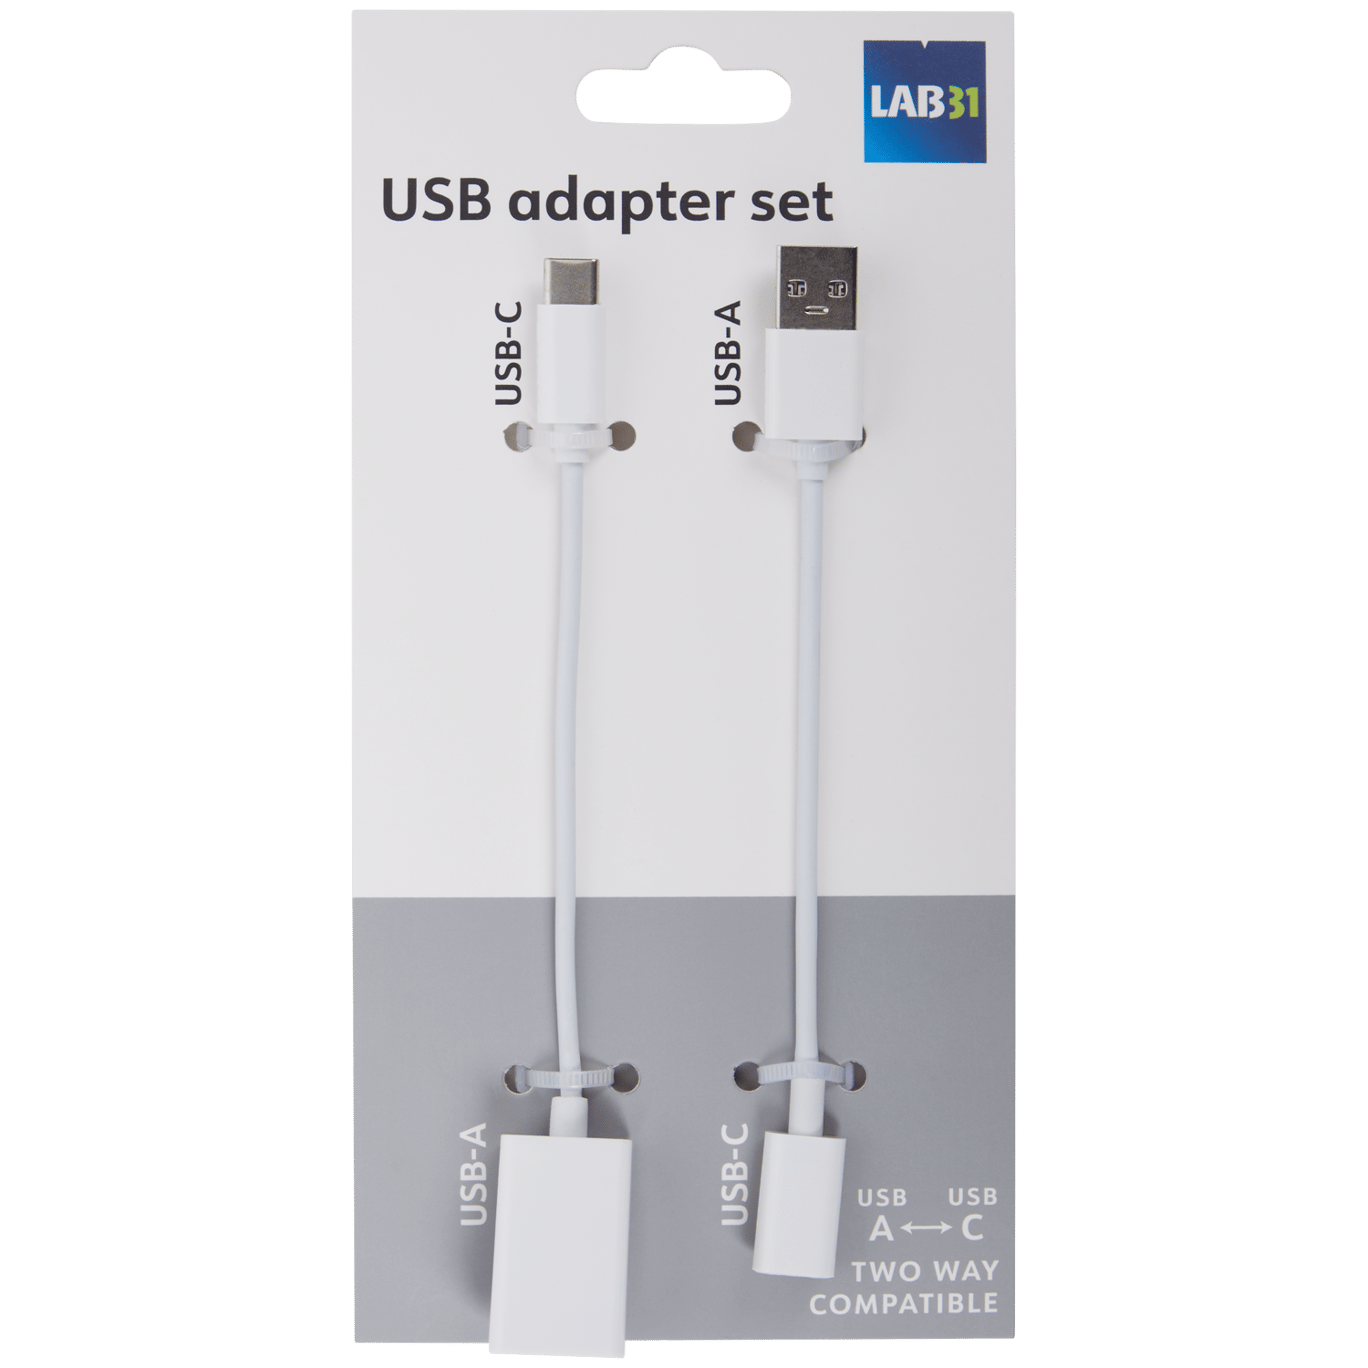 Adaptateurs USB-C Lab31